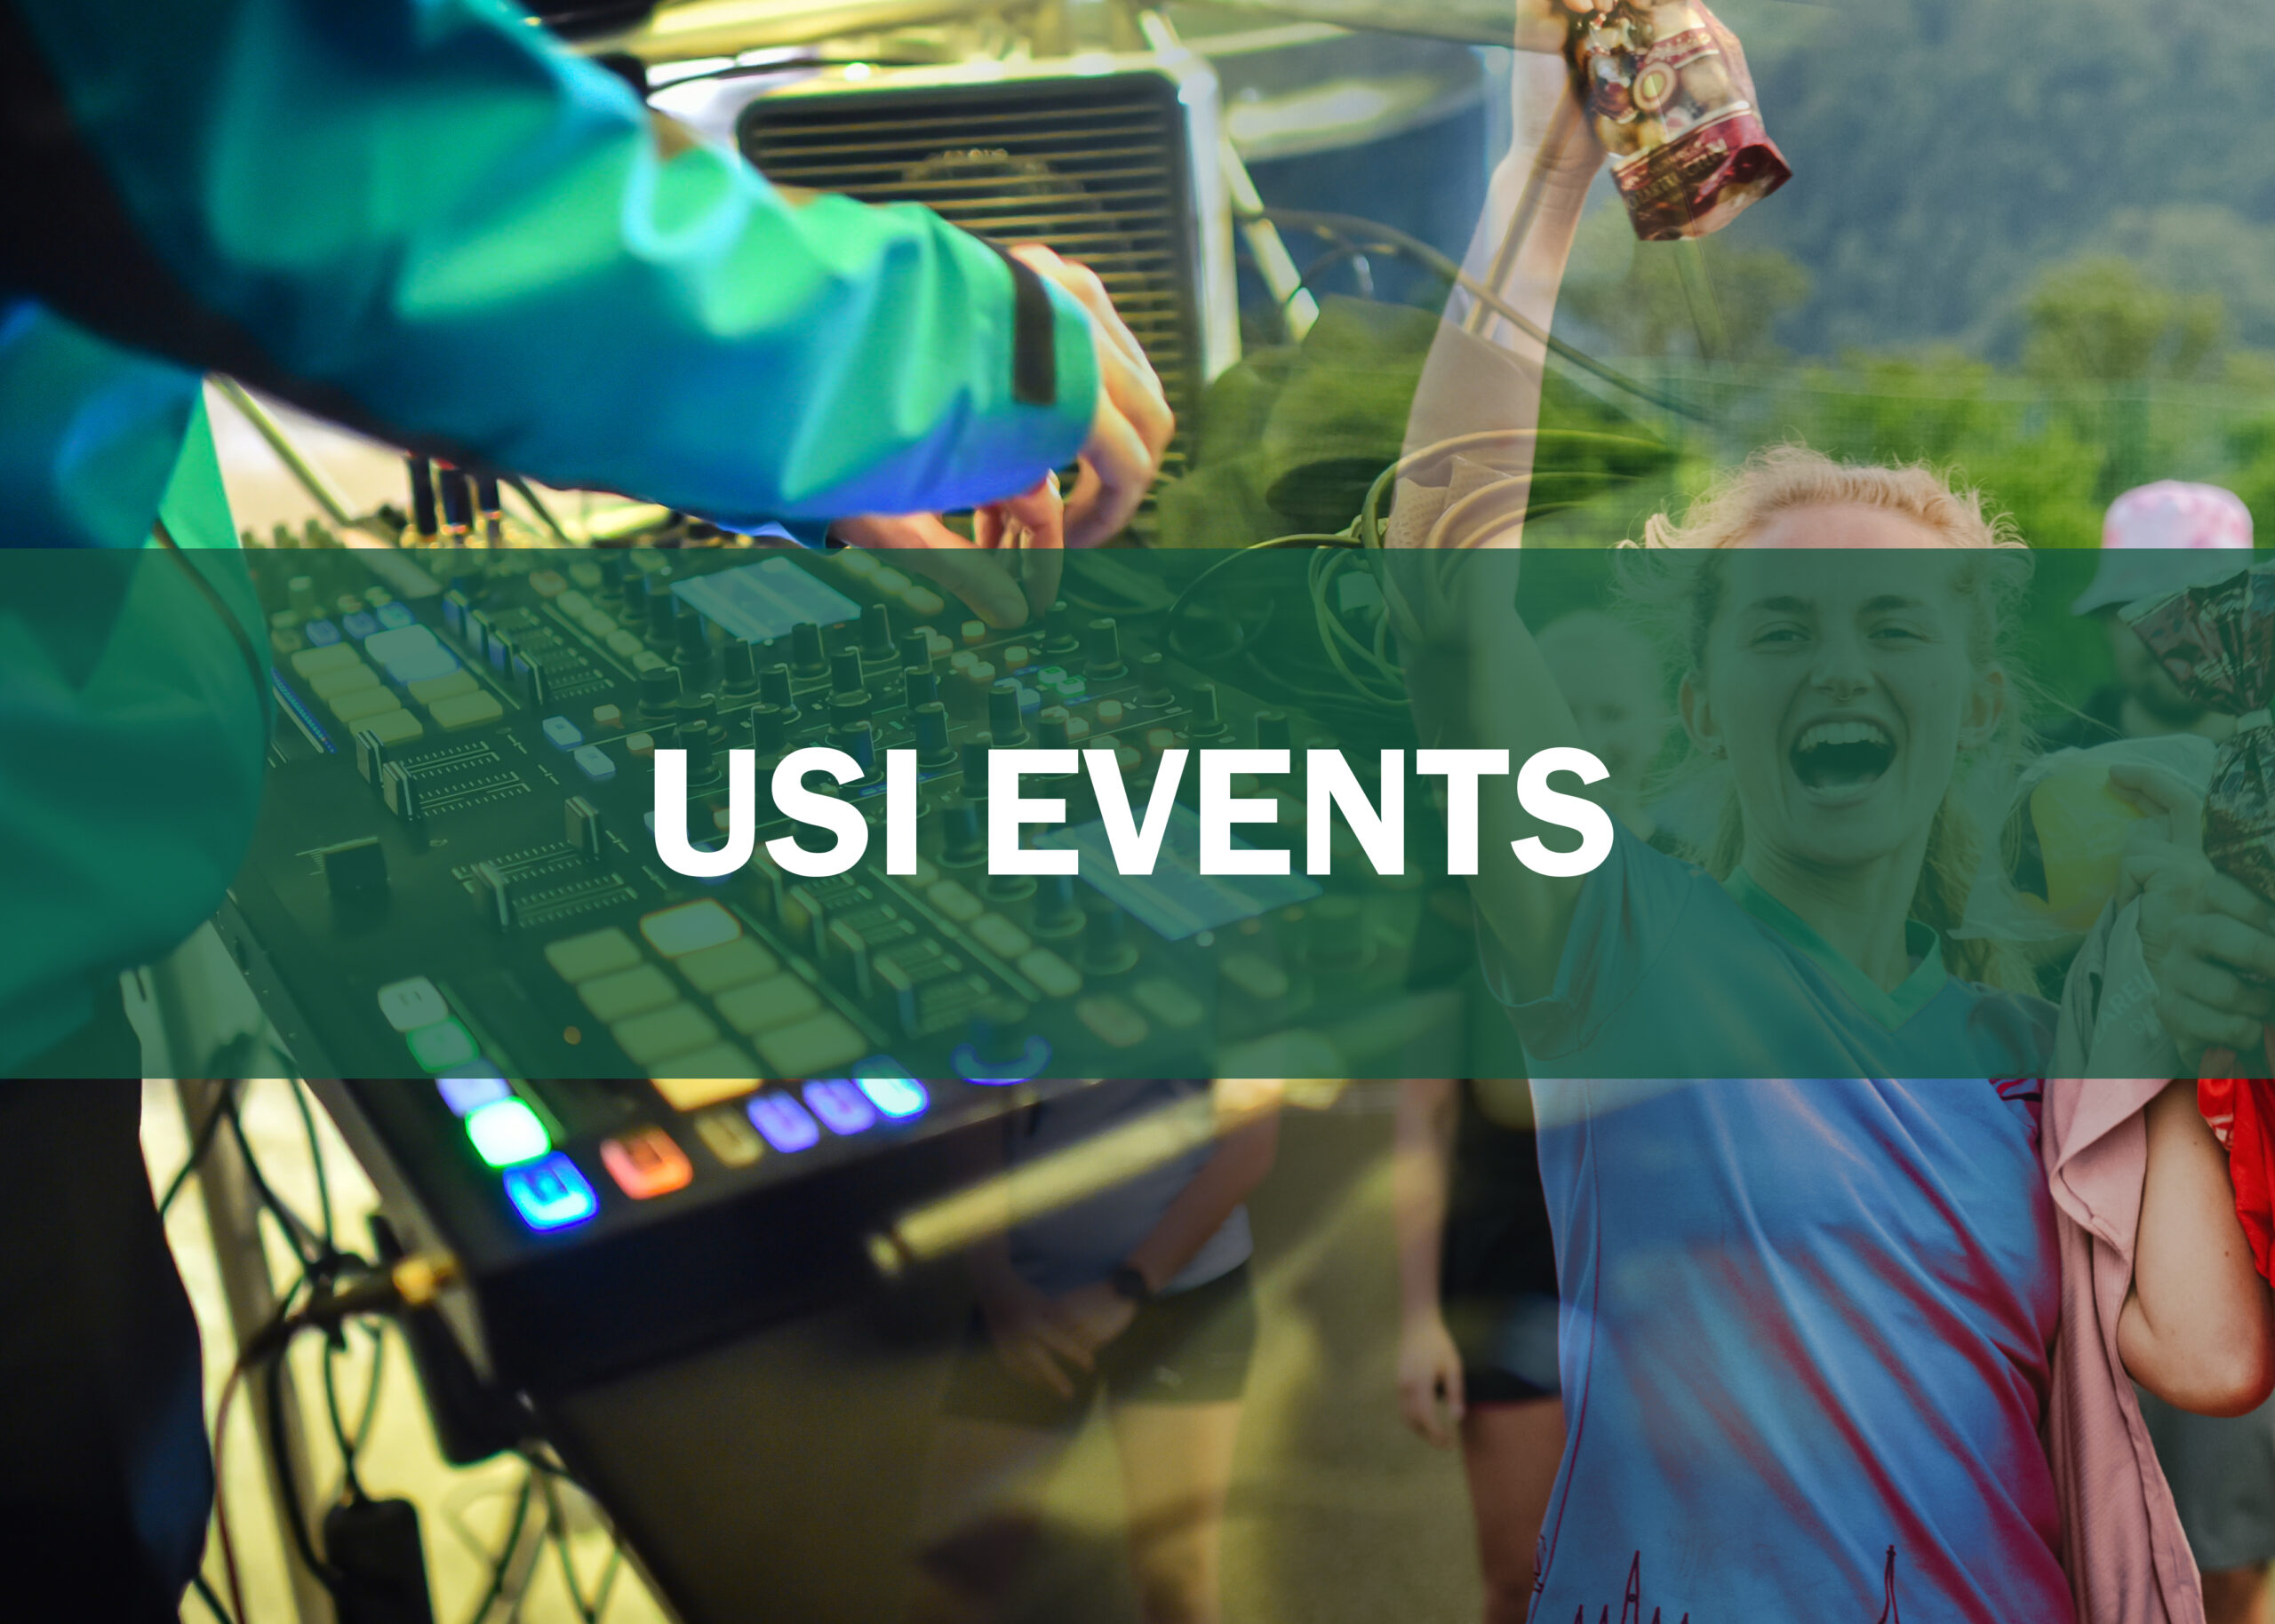 USI Events